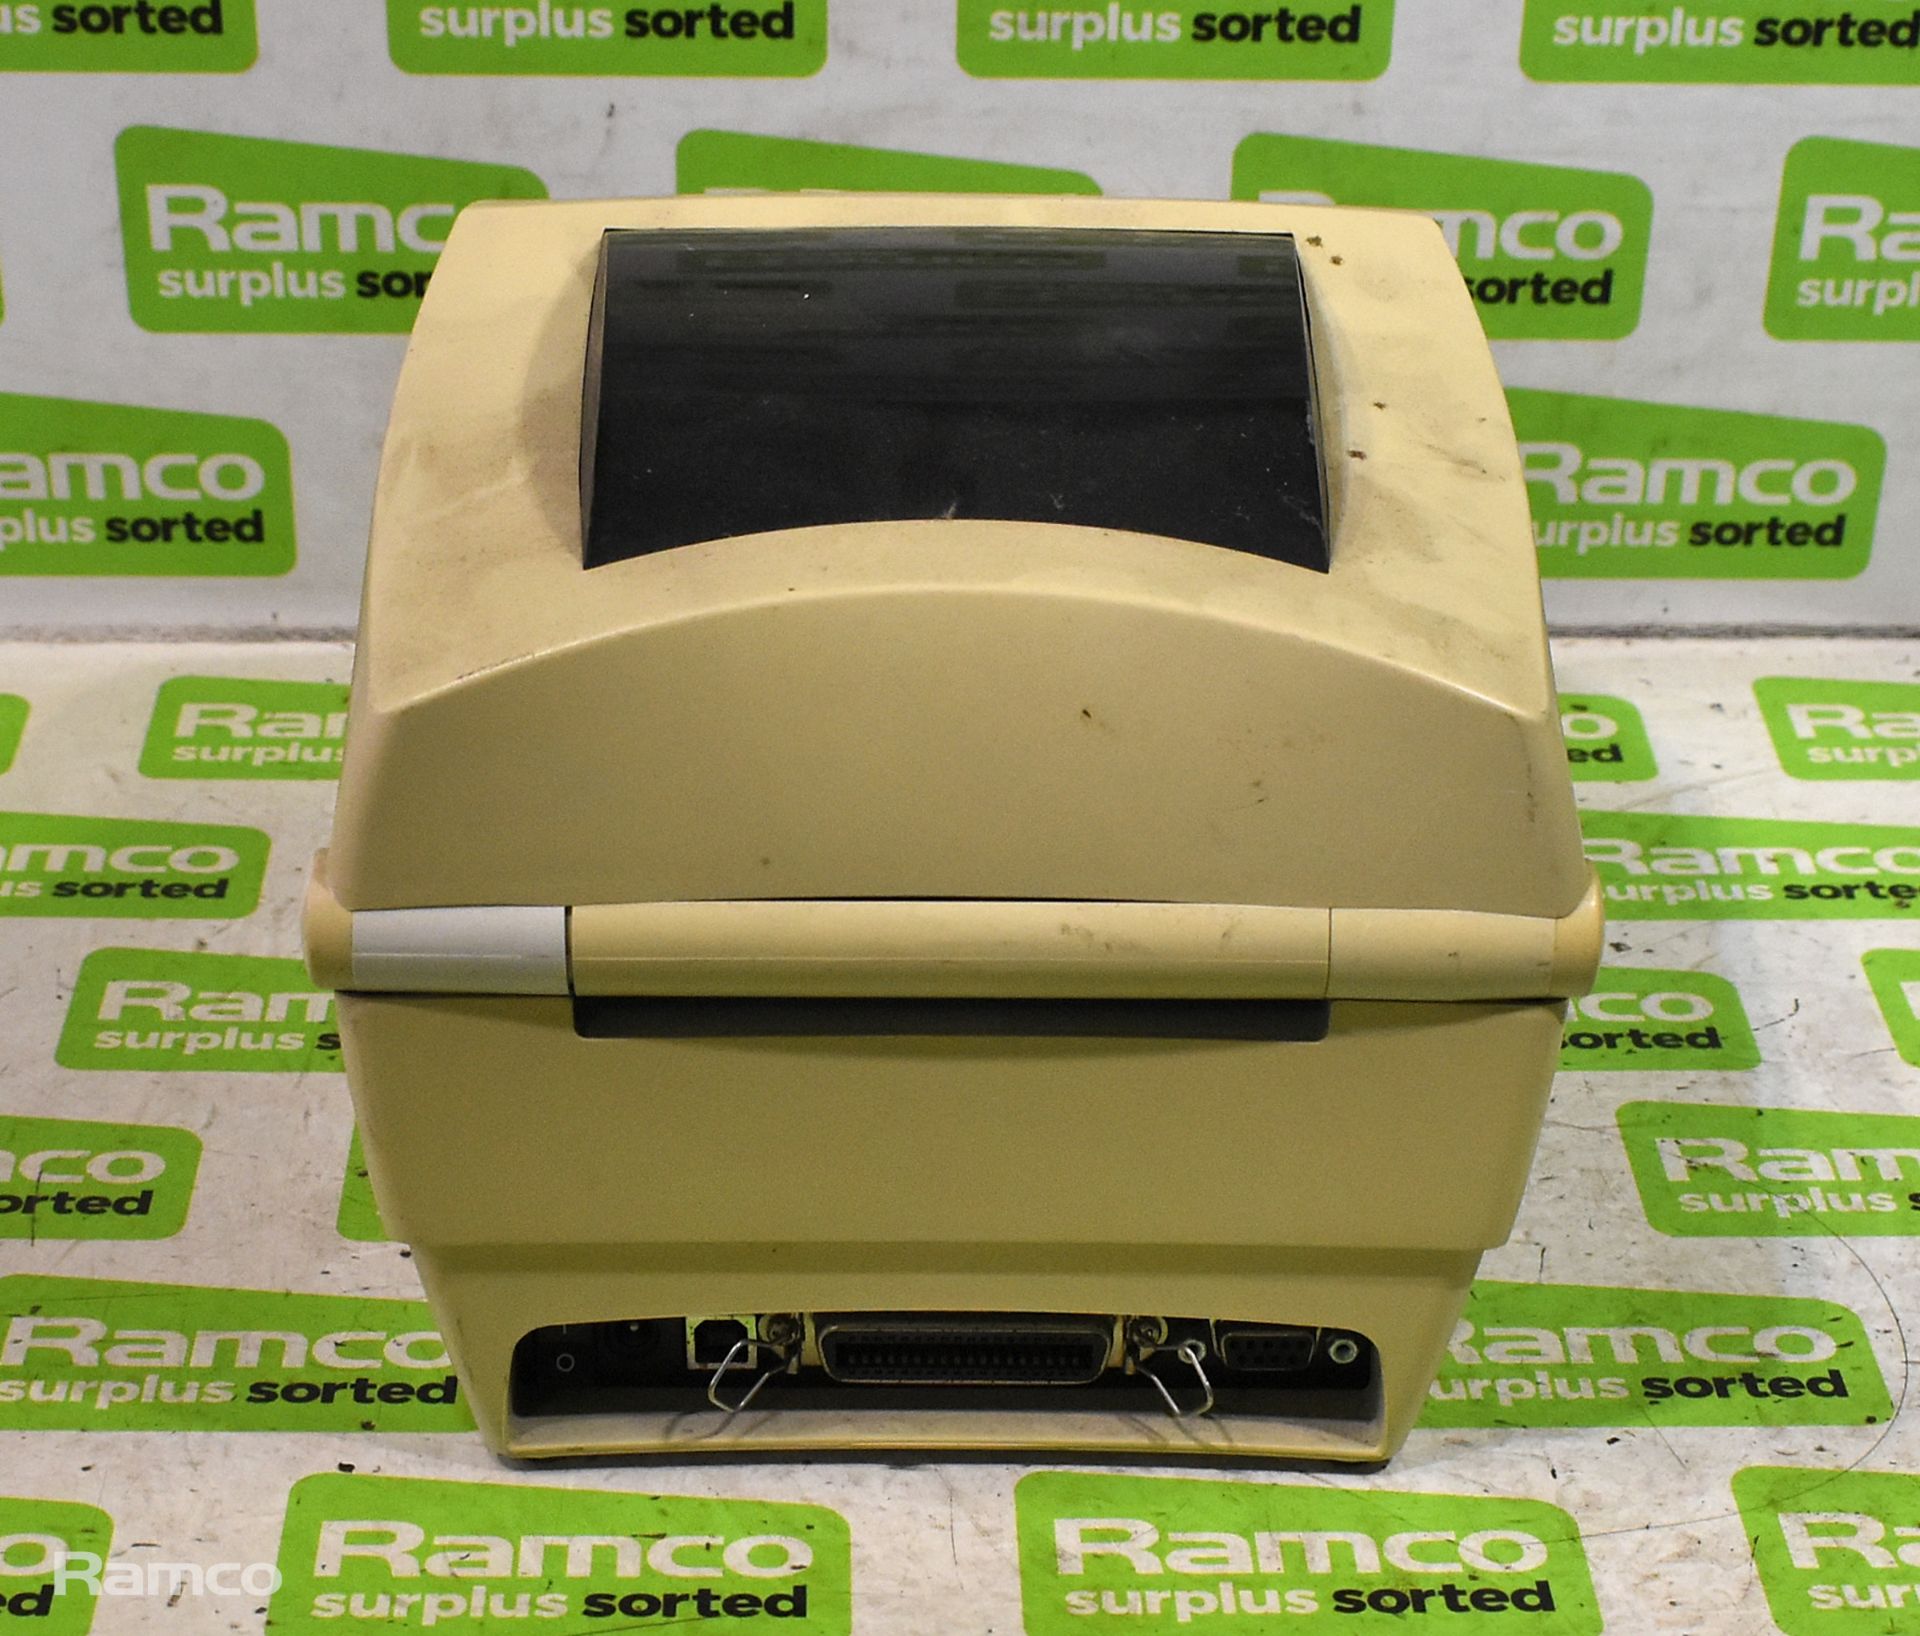 Zebra TLP2844 label printer, 4x boxes of Panasonic DVC digital video head cleaners - 5 units per box - Image 4 of 7